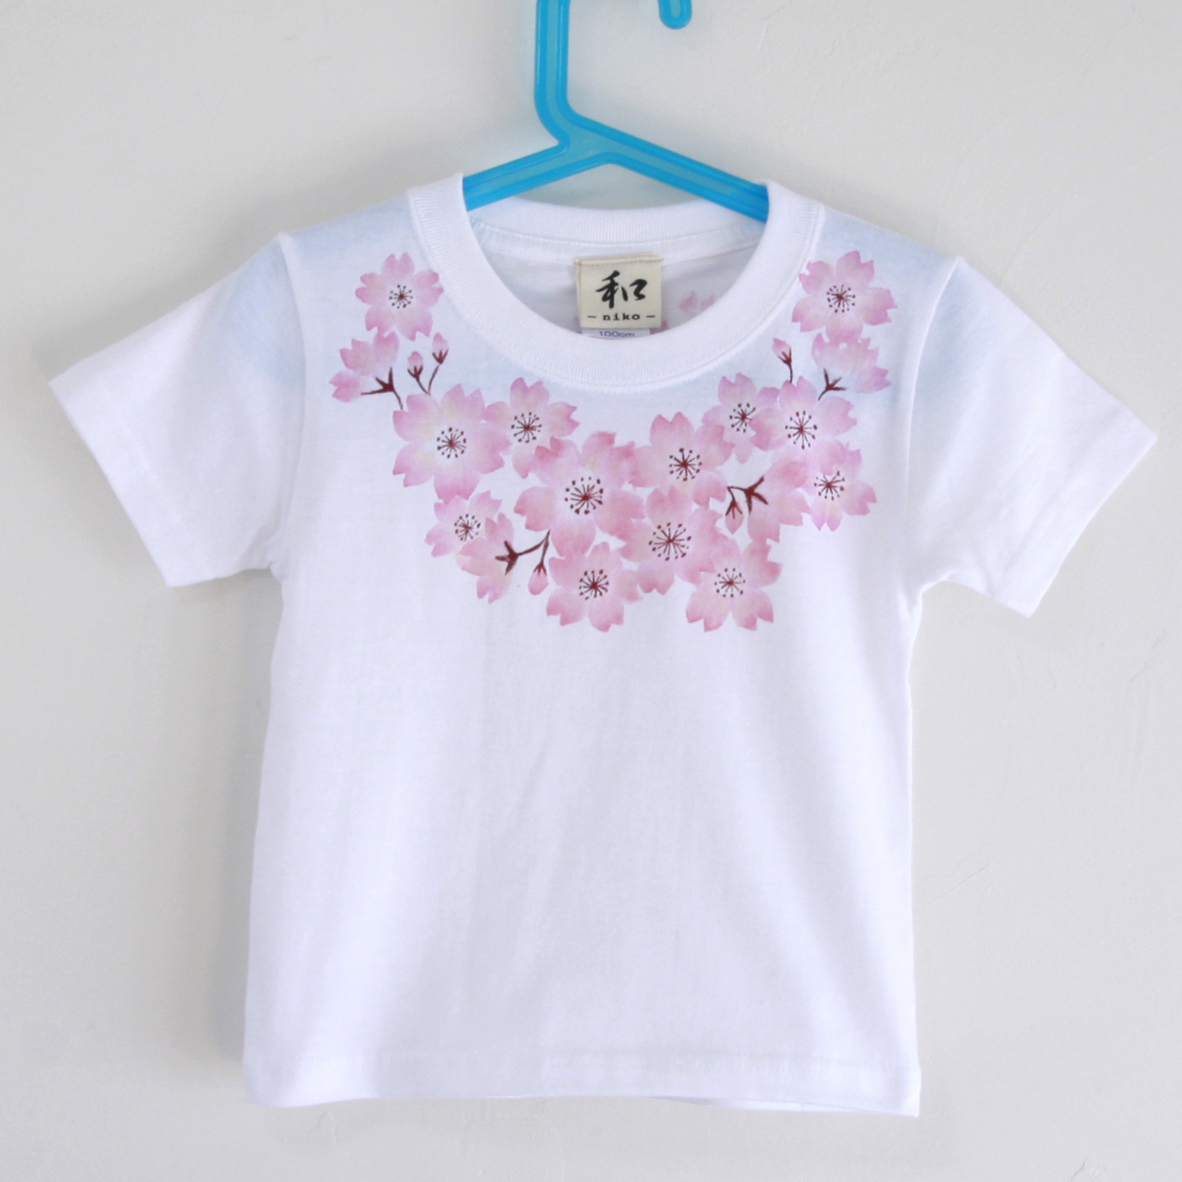 Children's Clothing Kids T-shirt Size 120 White Corsage Cherry Blossom Pattern T-shirt Handmade Hand-painted T-shirt Japanese Pattern Spring Present, tops, short sleeve t-shirt, 120(115~124cm)